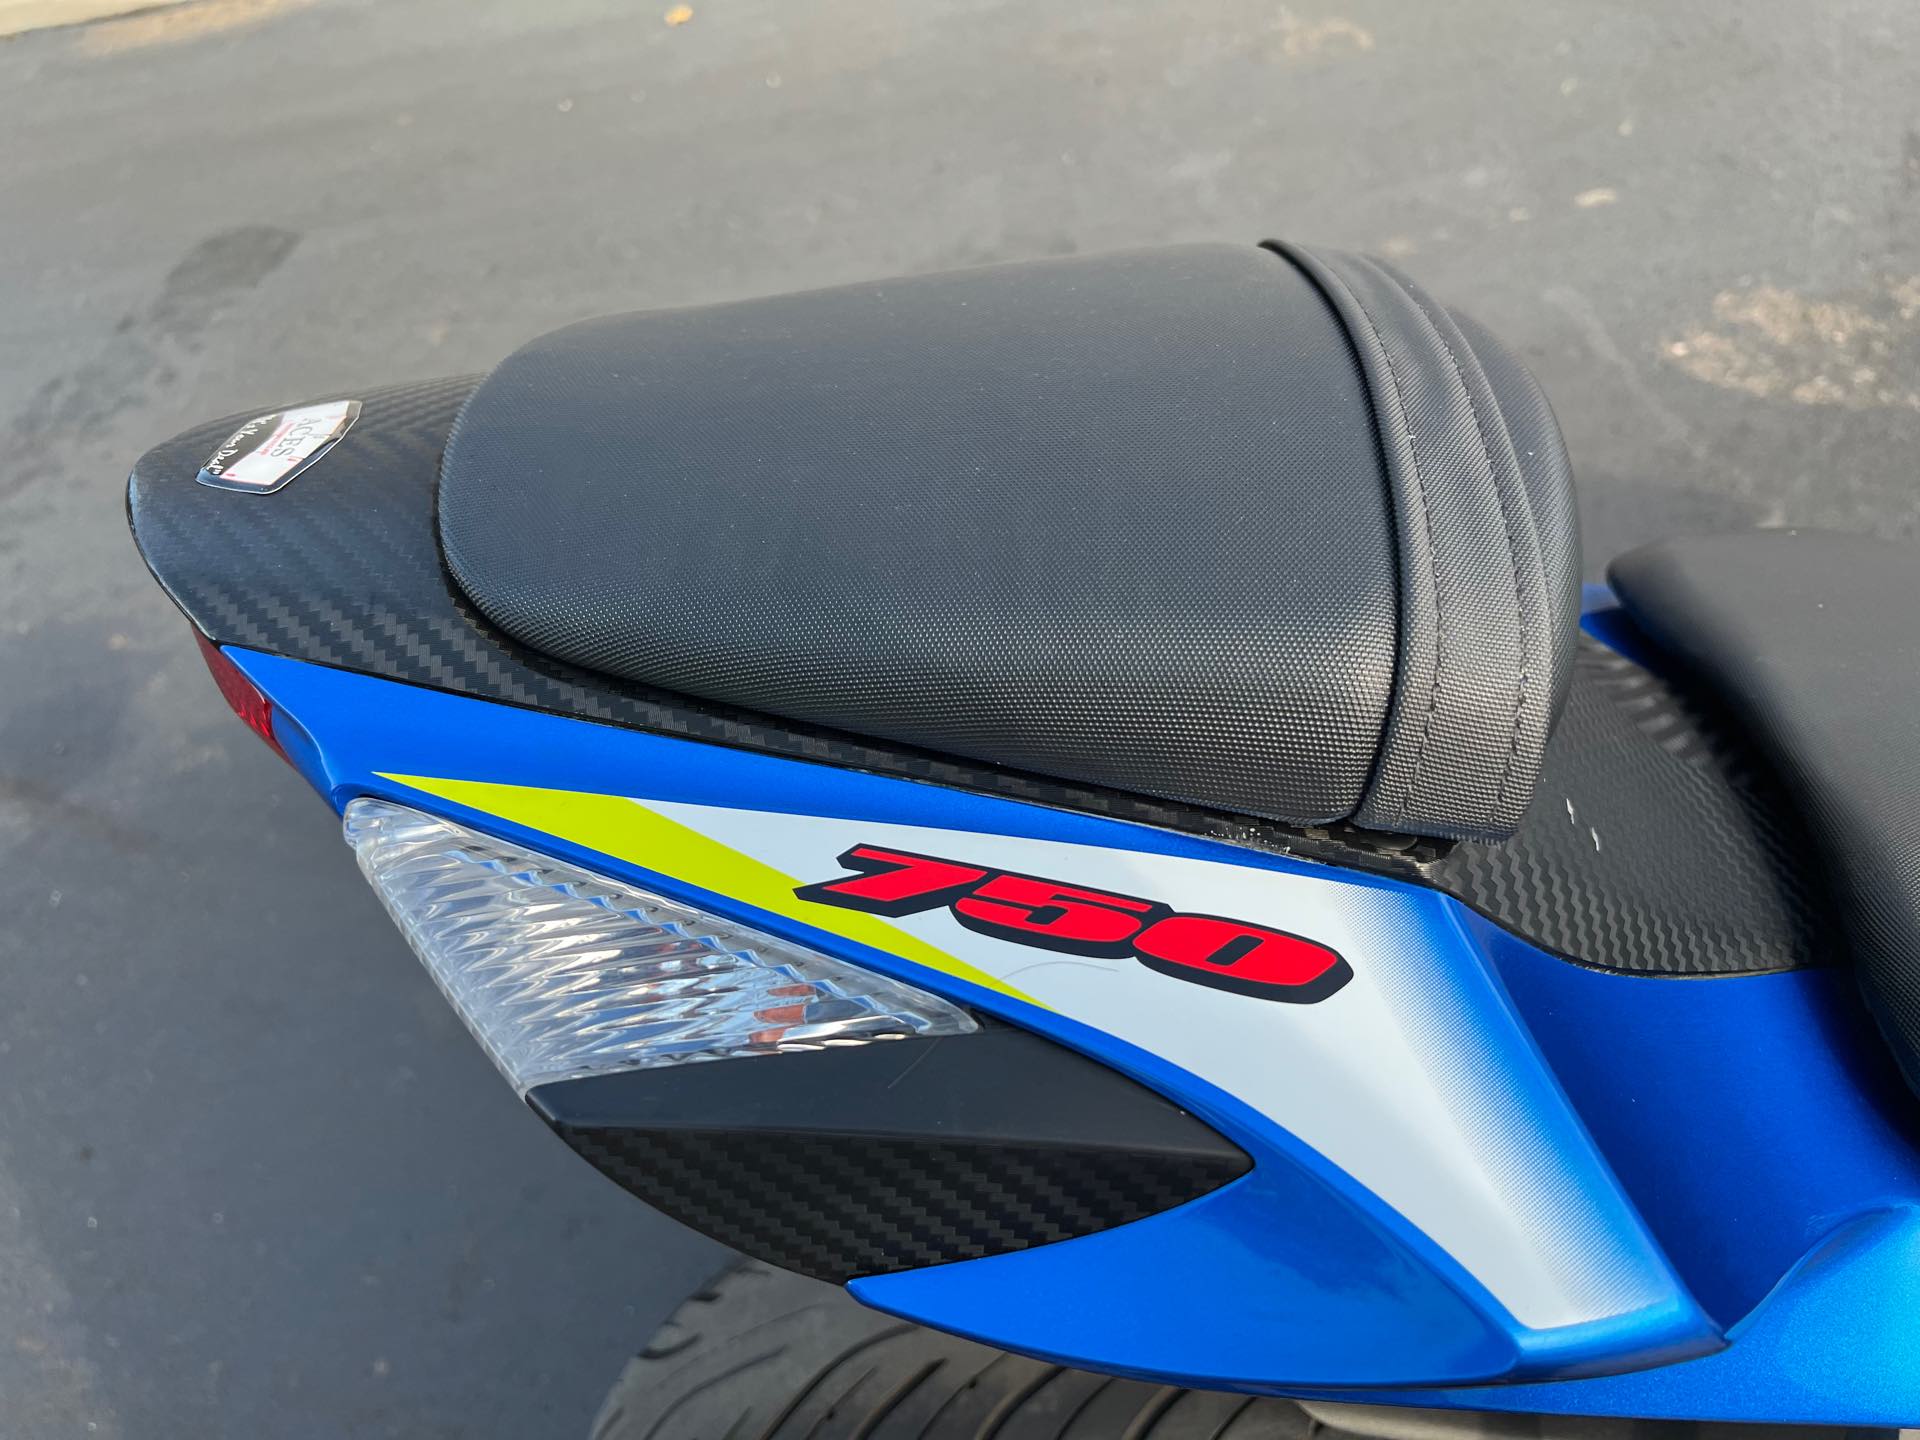 2015 Suzuki GSX-R 750 at Aces Motorcycles - Fort Collins